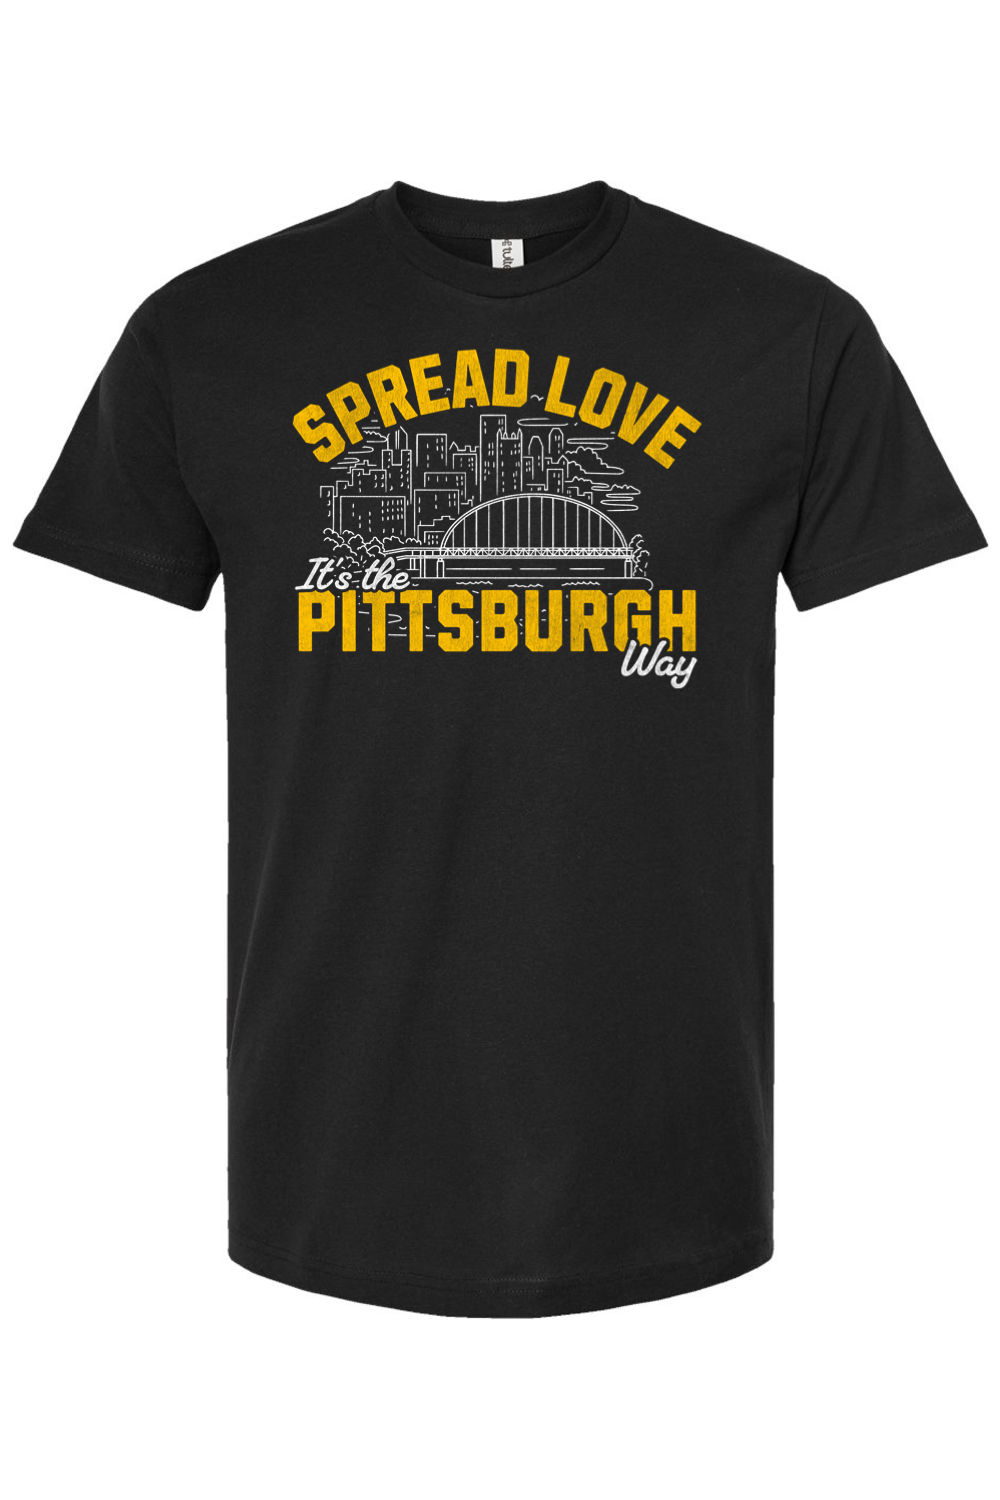 Spread Love It's the Pittsburgh Way - Yinzylvania